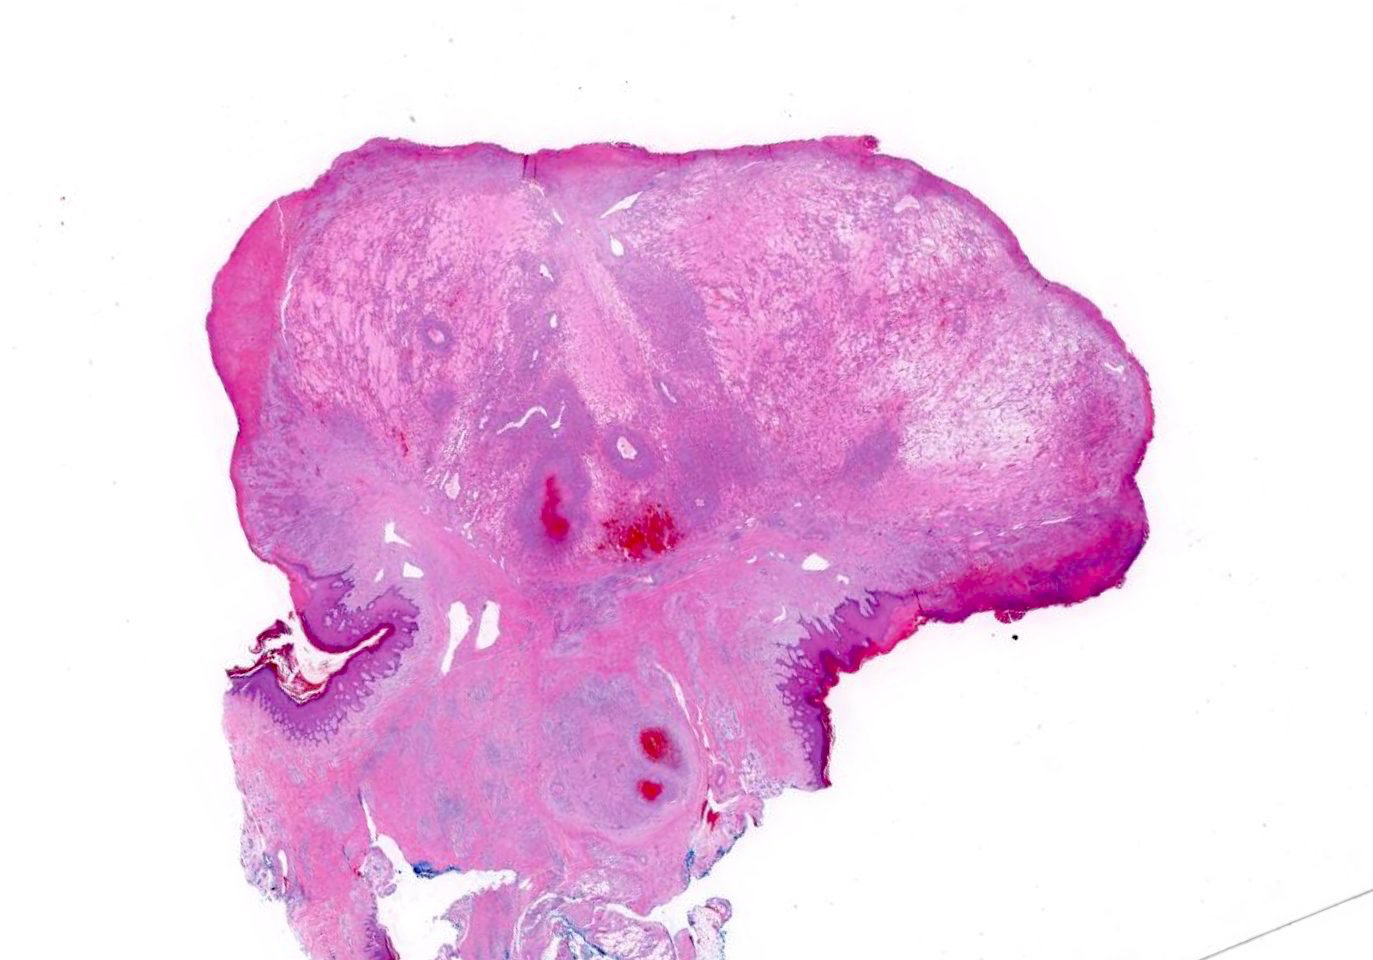 Lobular capillary hemangioma